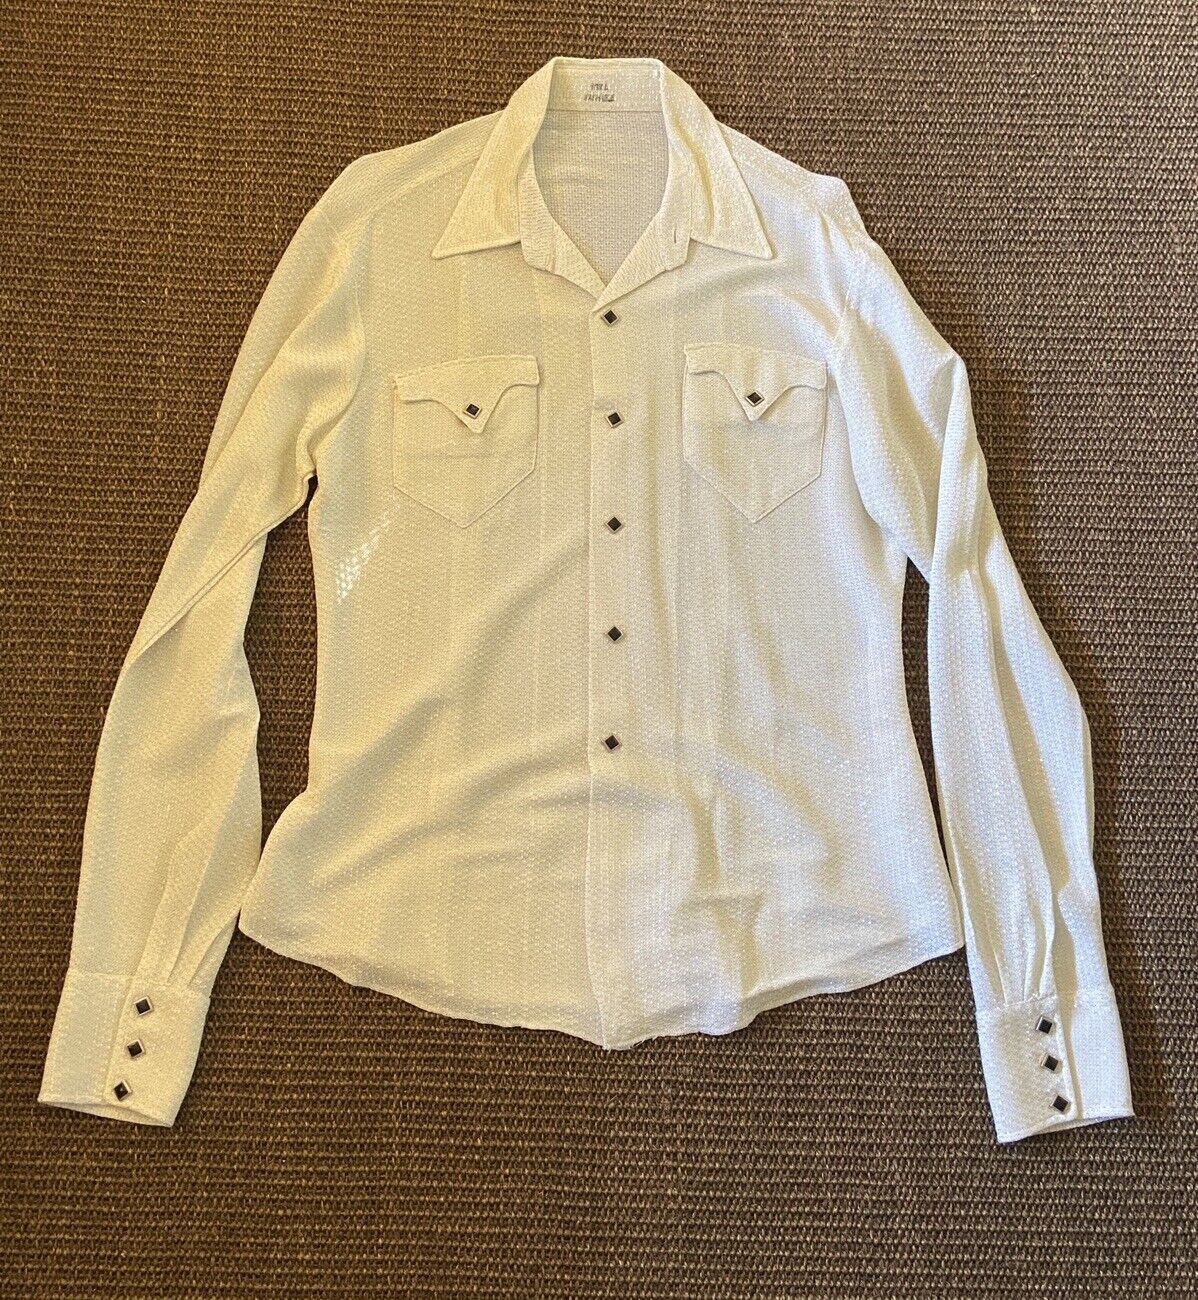 Vintage 1950s Rockabilly Lurex White and Silver Western Shirt 15 ML